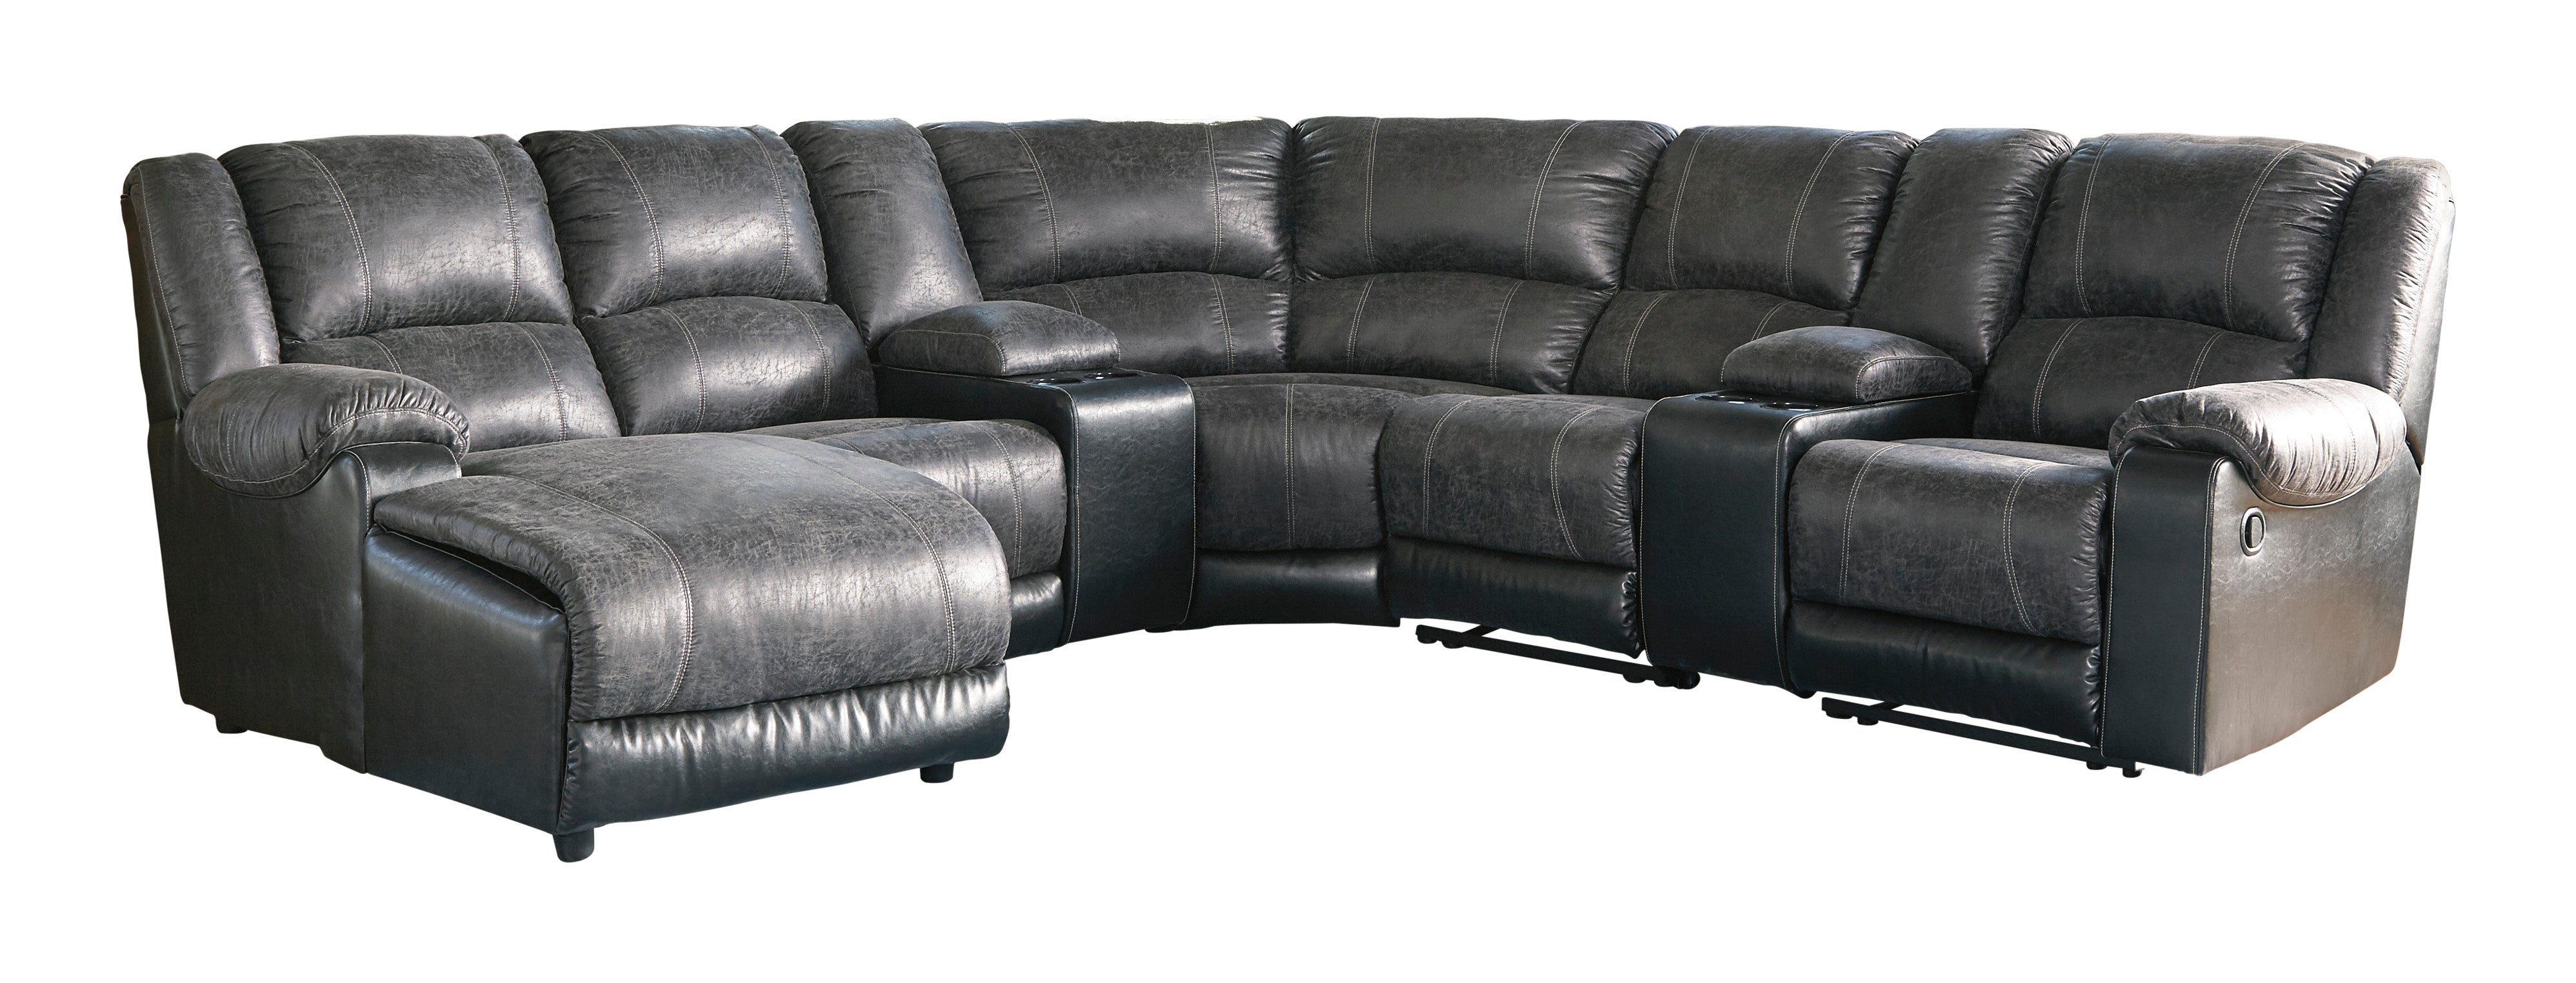 Signature Design 50301 16 Ashley Nantahala Slate 7 Piece Sectional Sofa